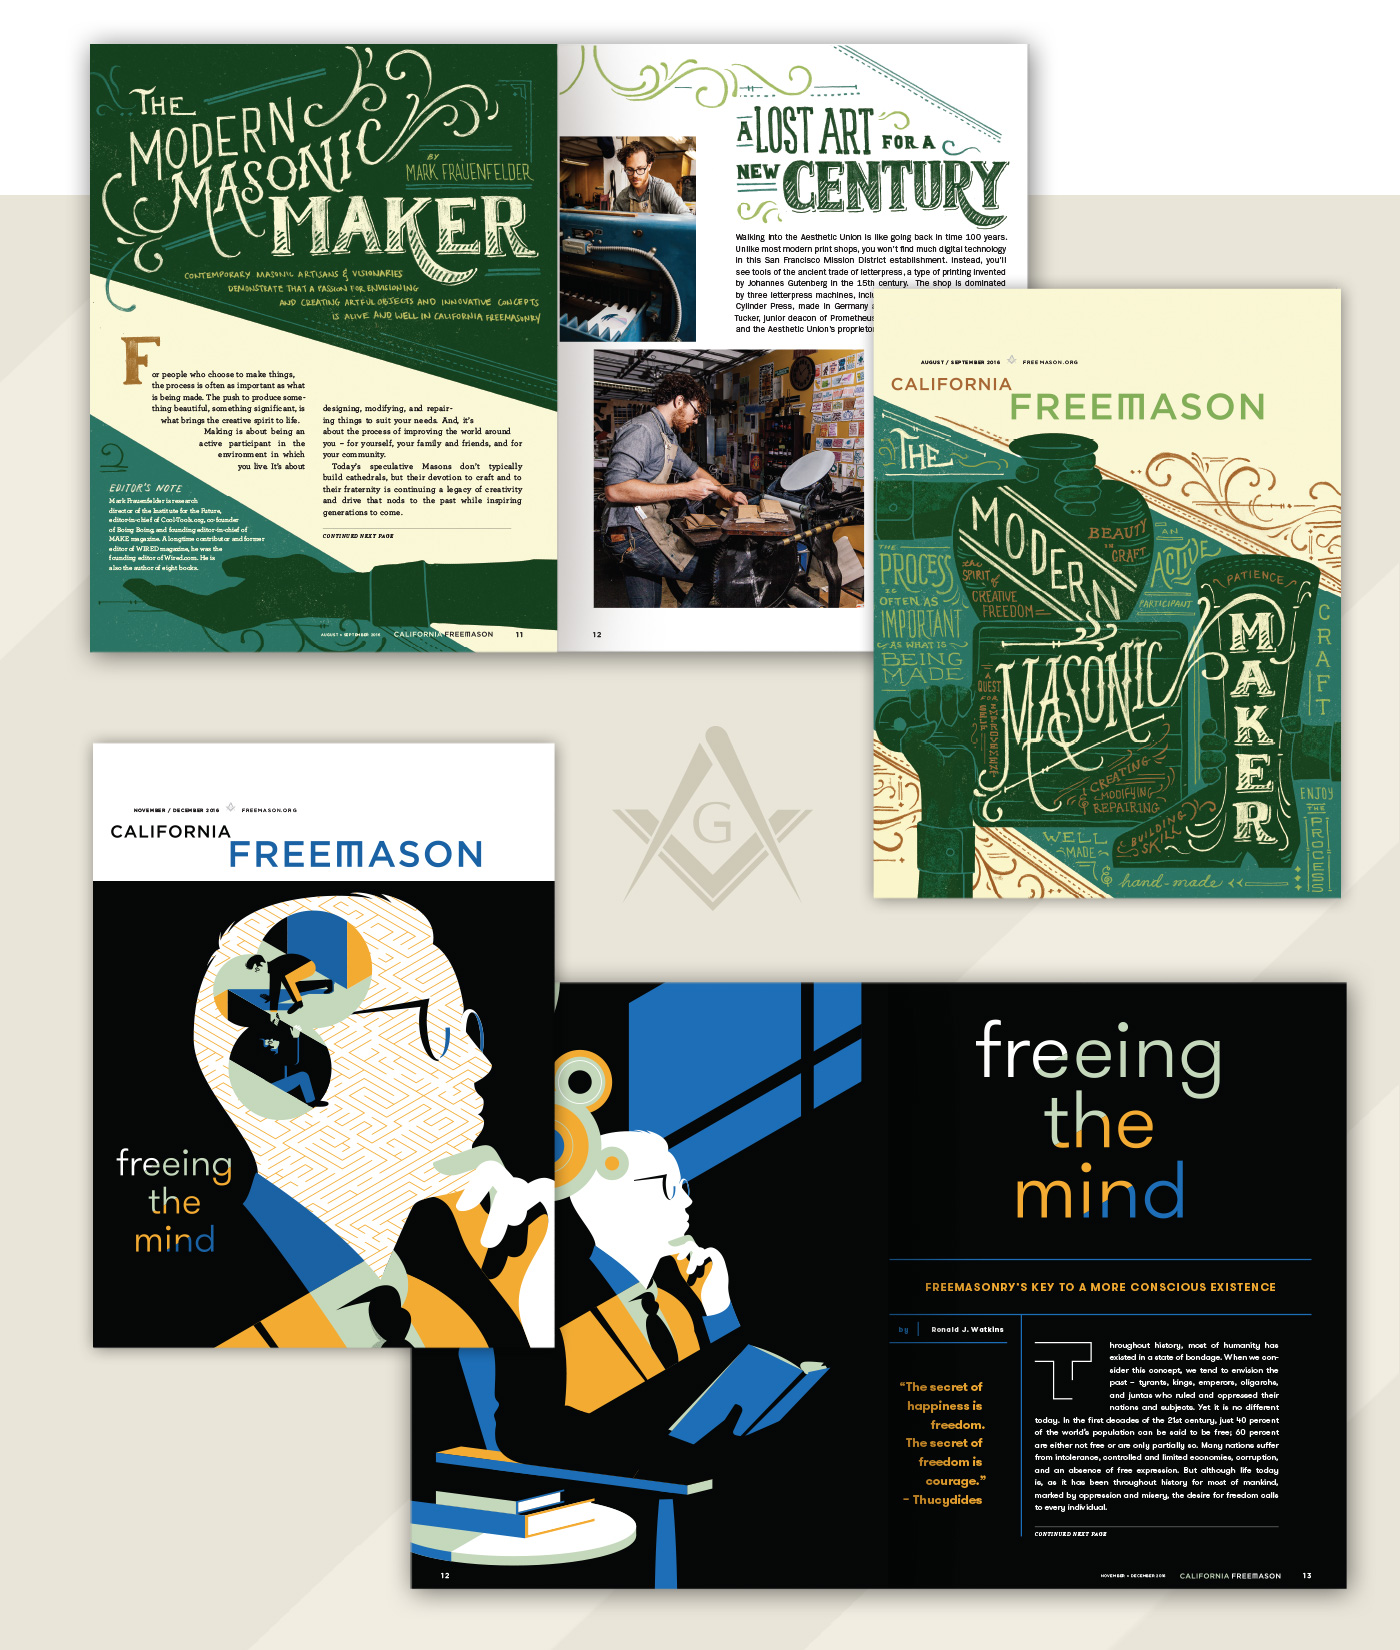 California Freemason Magazine covers and spreads